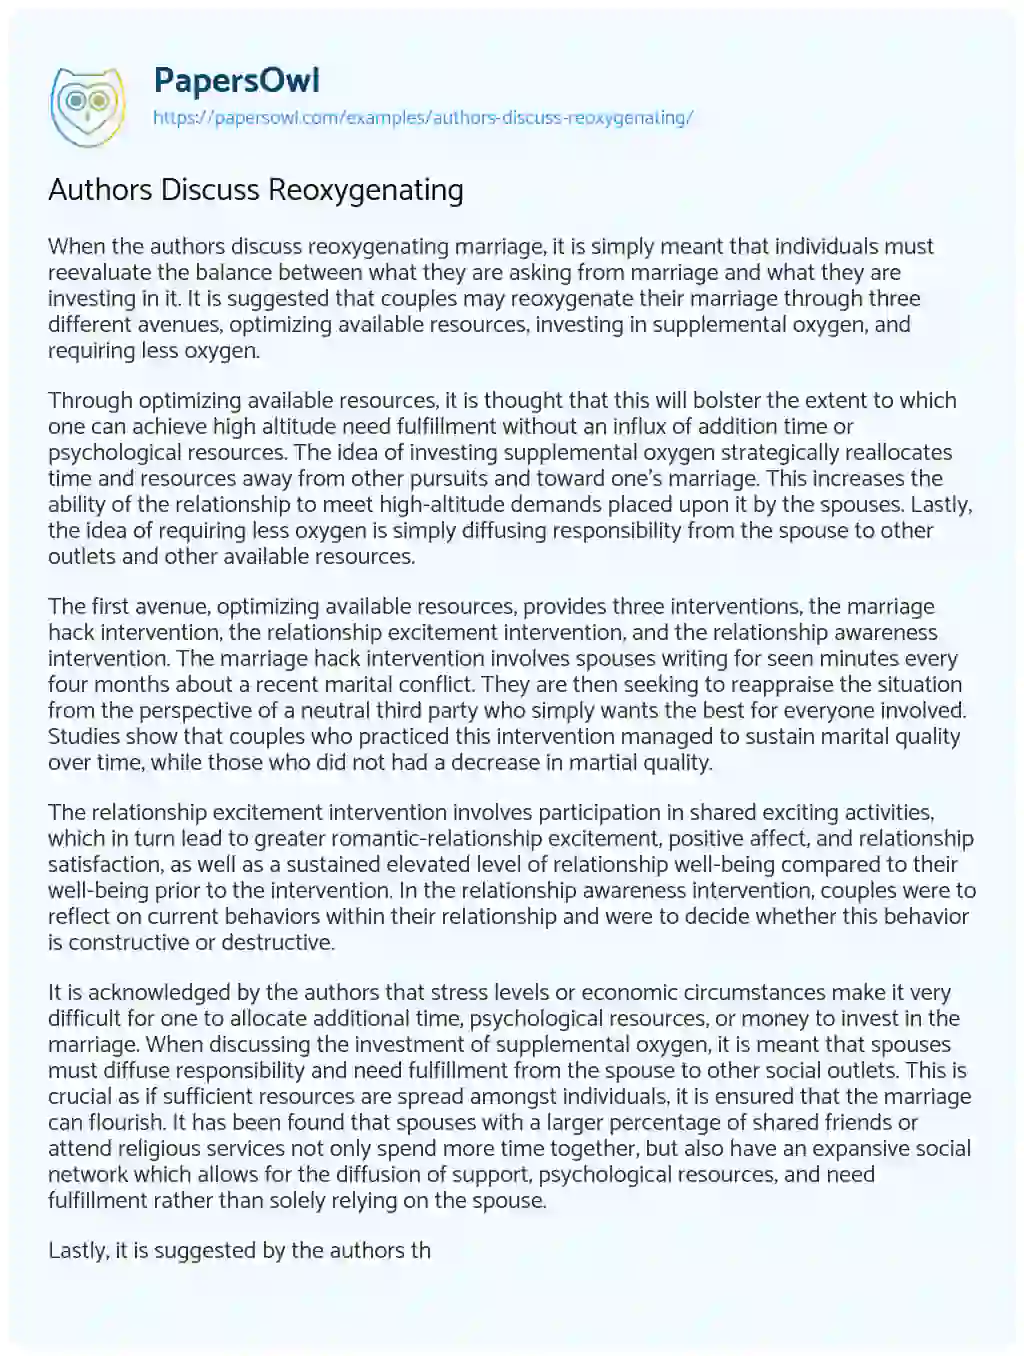 Essay on Authors Discuss Reoxygenating